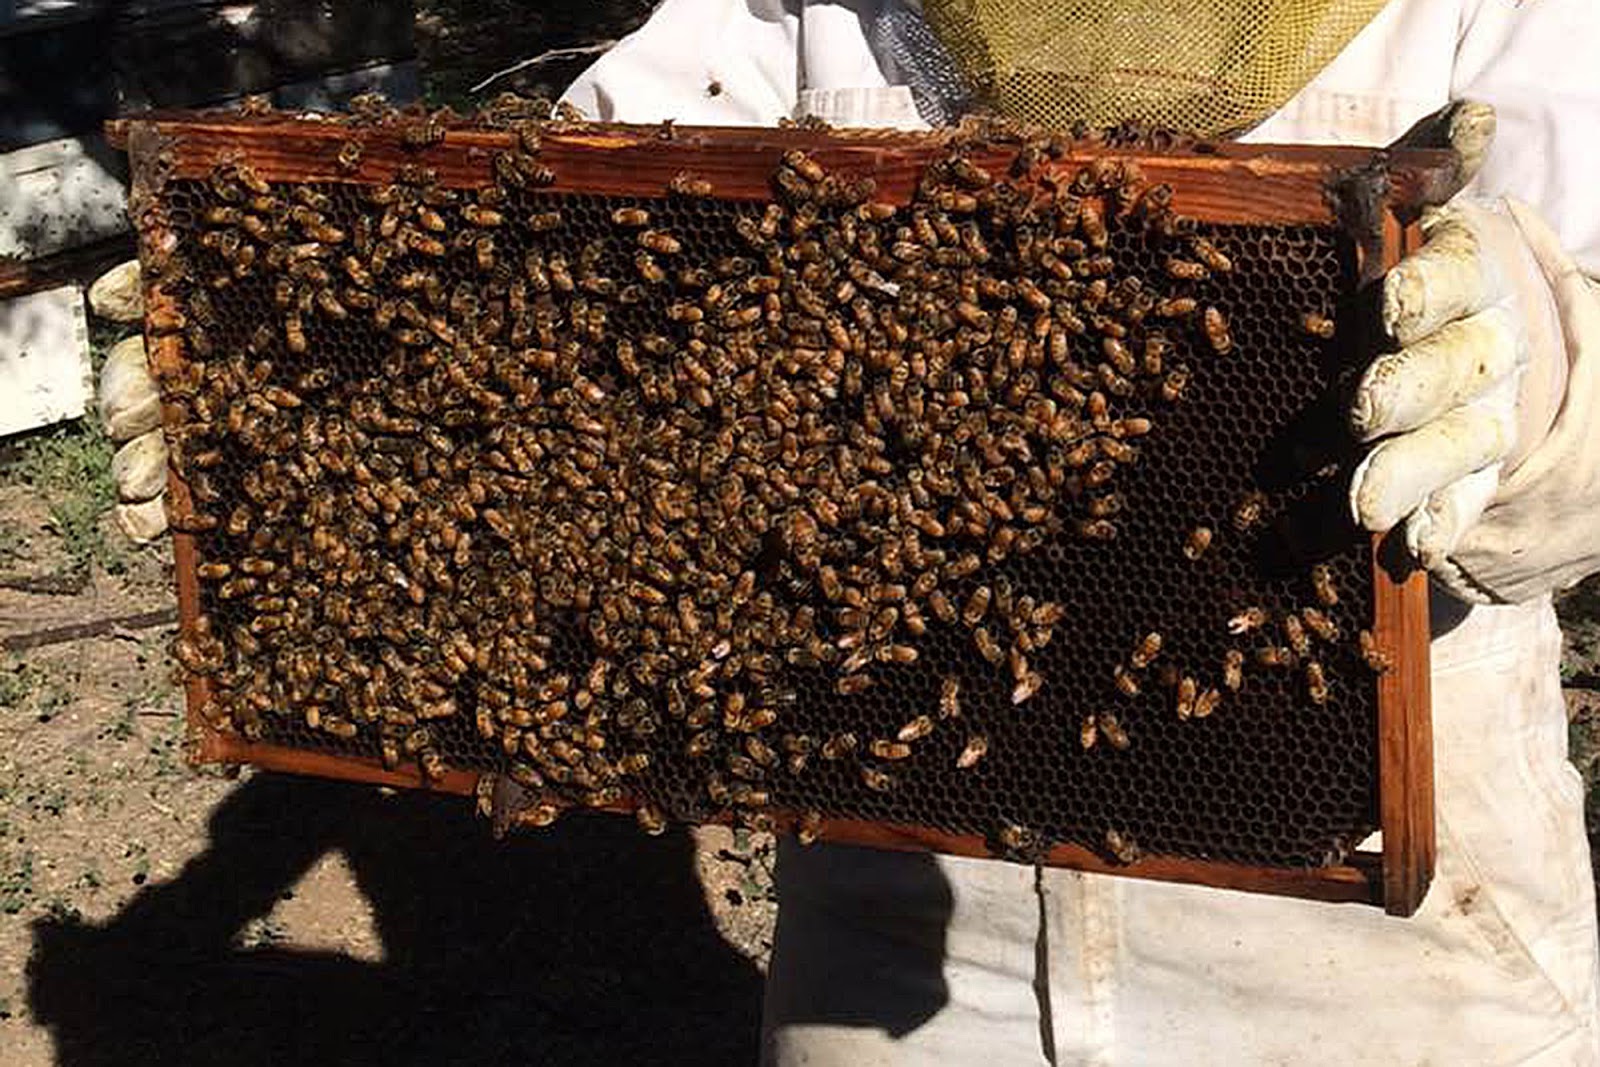 Yποβολή δήλωσης στοιχείων παραγωγής από παραγωγούς & εμπόρους μελισσοτροφών